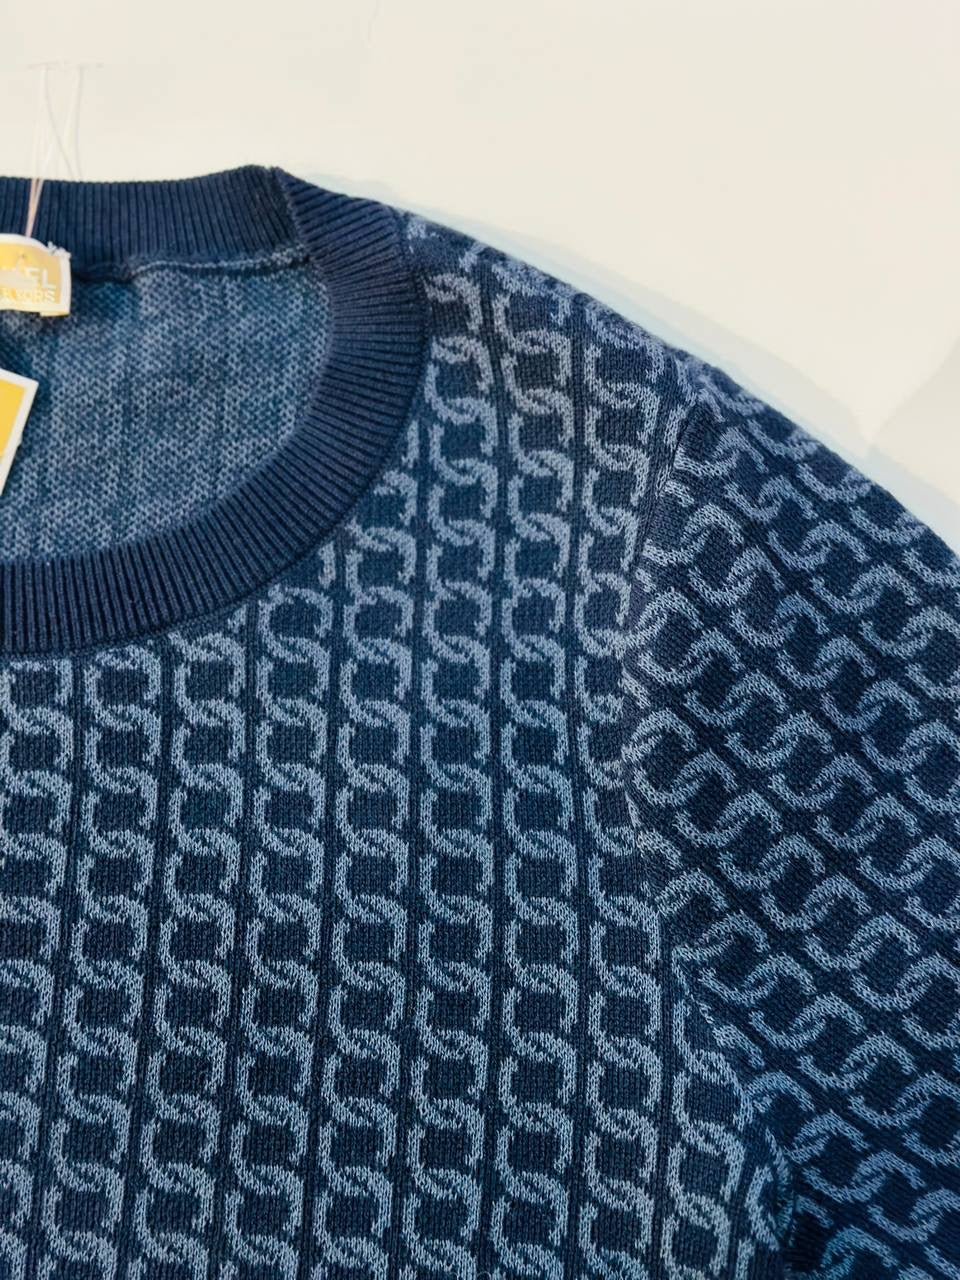 Michael kors sweater